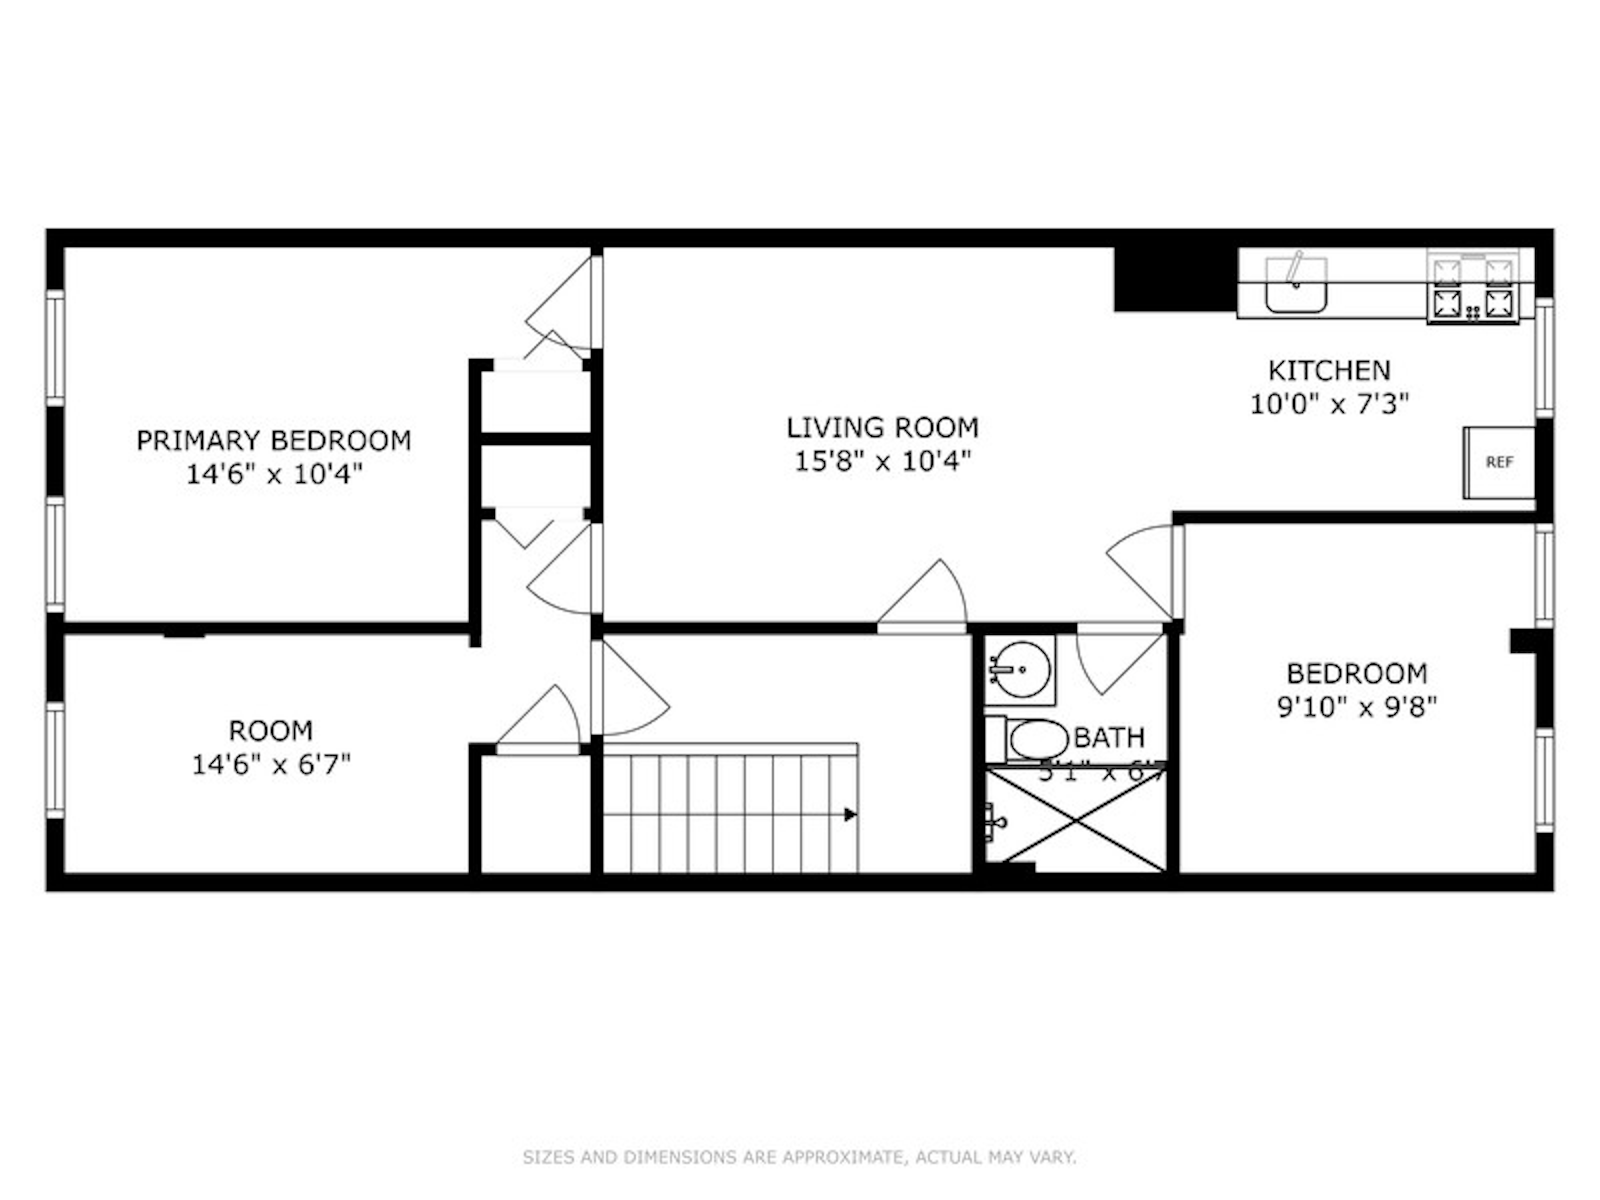 Floorplan for 183, 32nd Street, 3